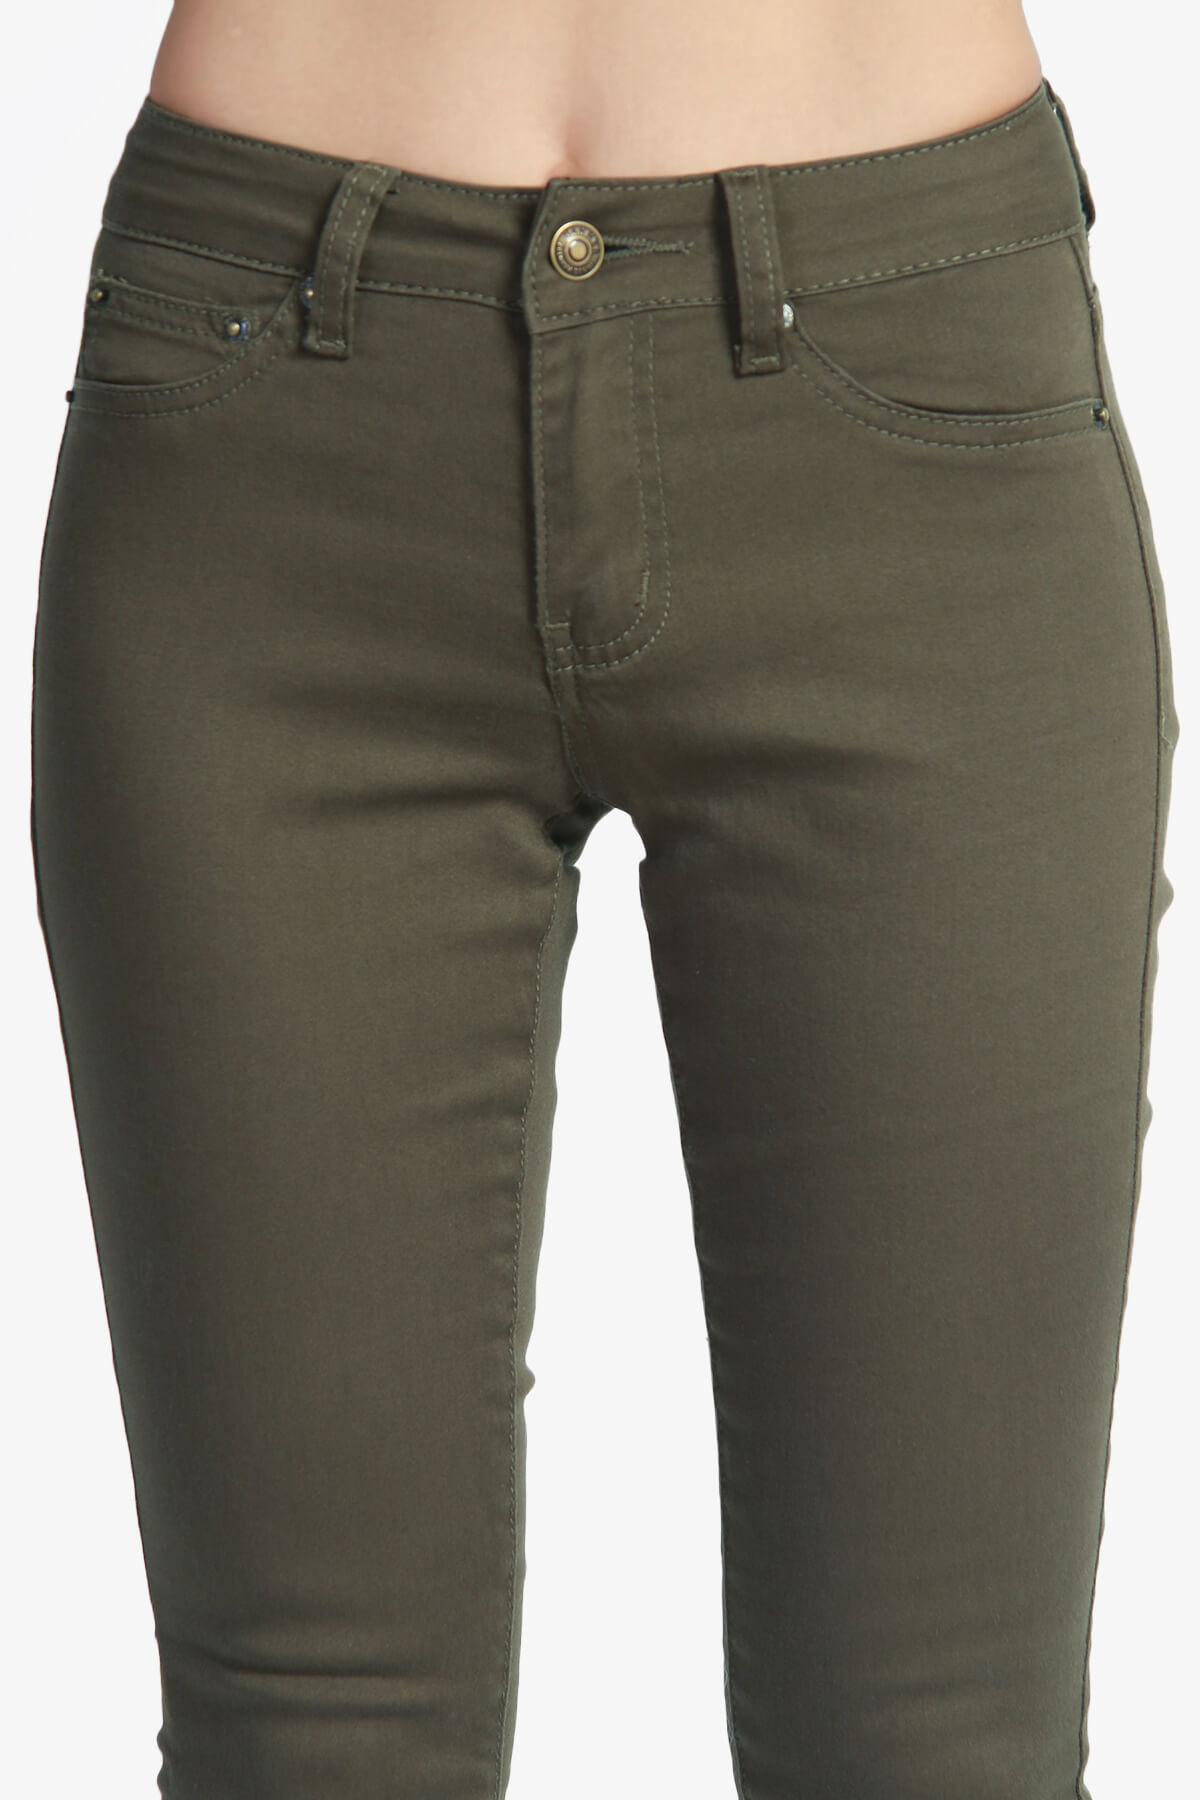 TheMogan Women's Army Olive Green 5 Pocket Stretch Denim Low Rise Skinny Jeans - image 5 of 7